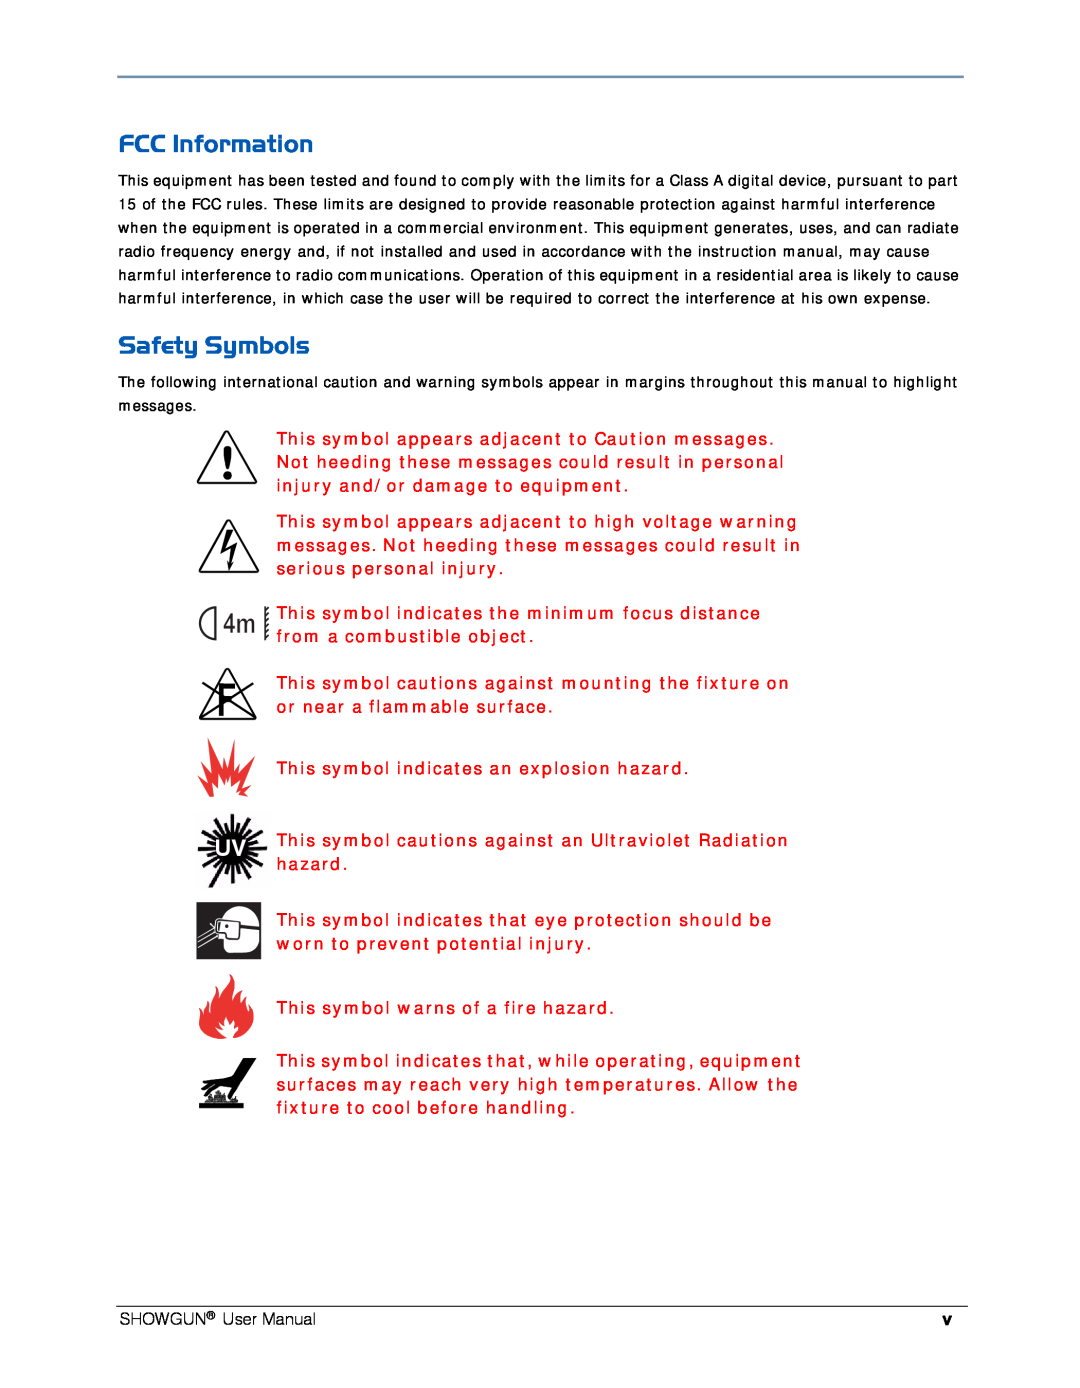 High End Systems SHOWGUN user manual FCC Information, Safety Symbols 